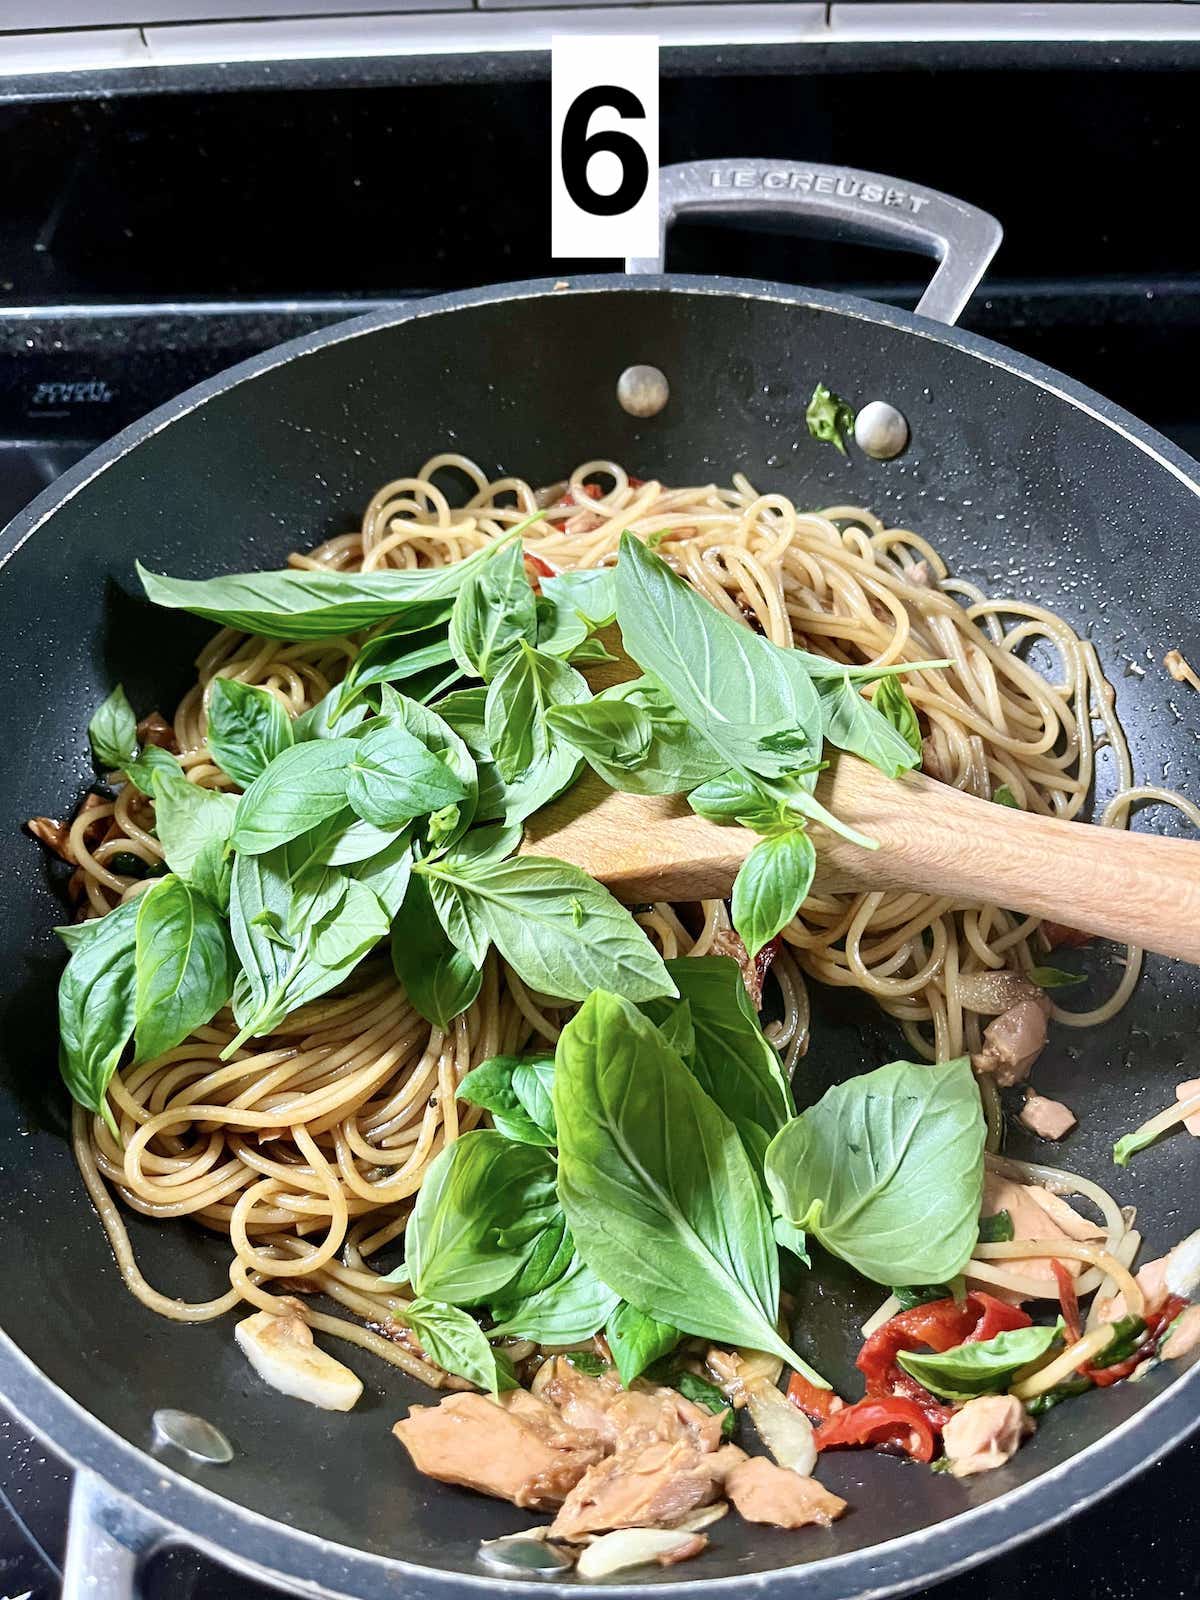 Adding Thai basil leaves to a spicy spaghetti.